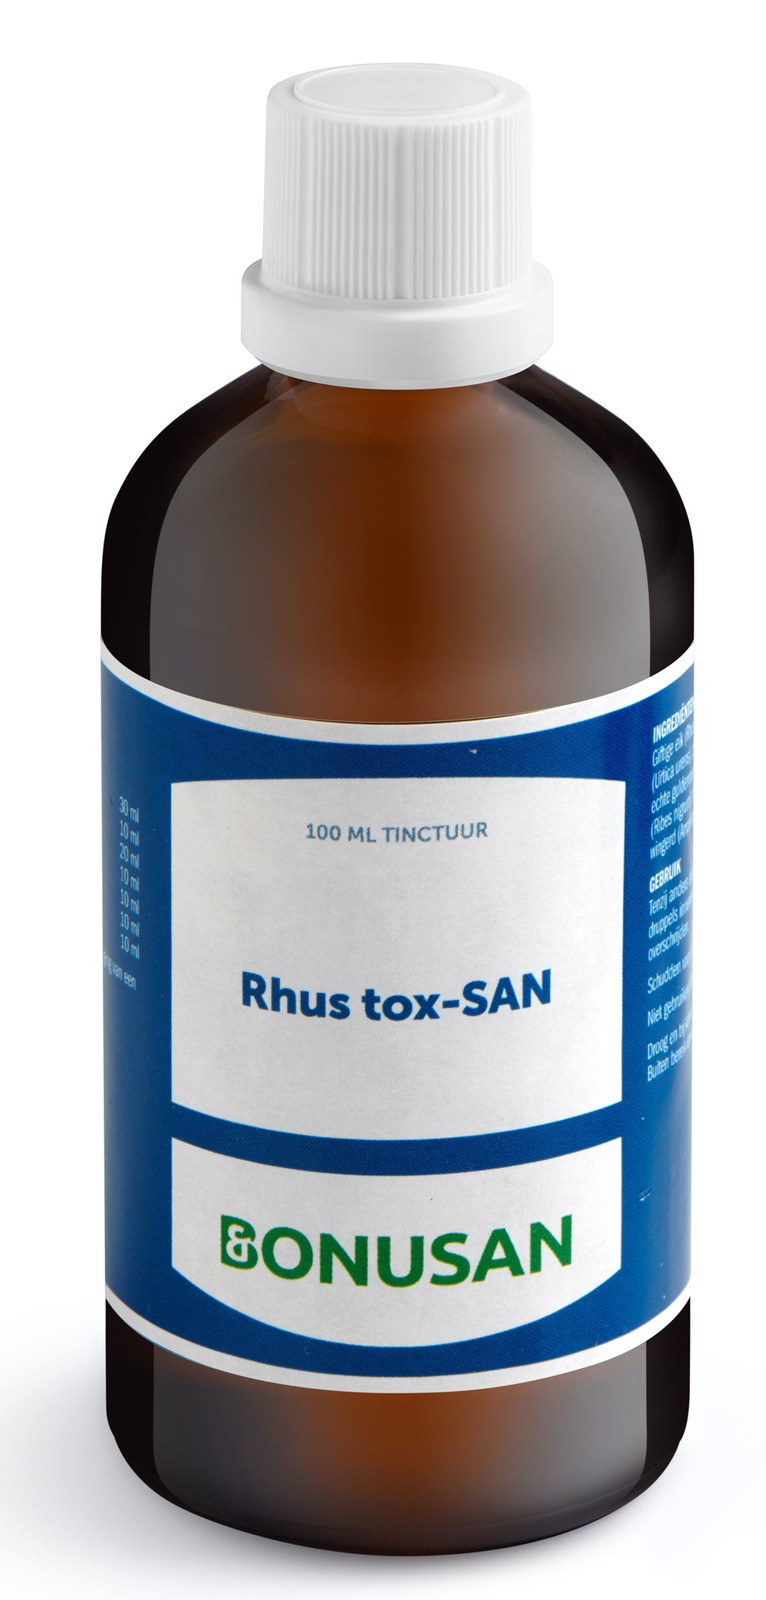 Bonusan Rhus tox-SAN Tinctuur